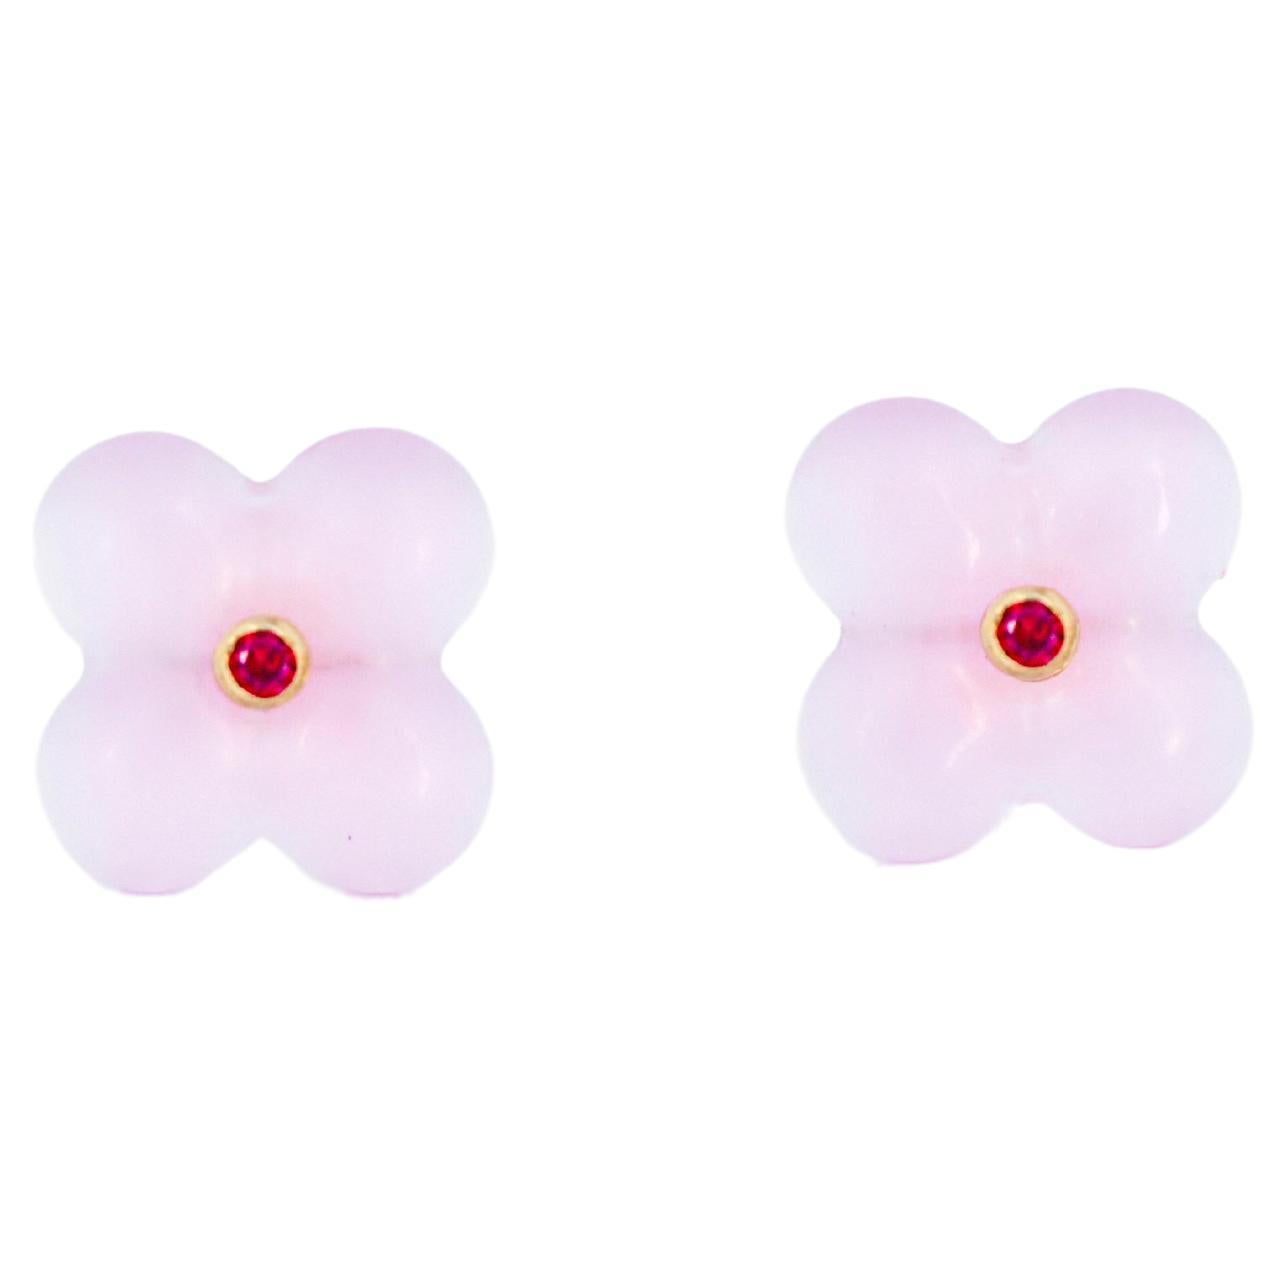 14k gold carved  pink quartz flower earrings studs. For Sale